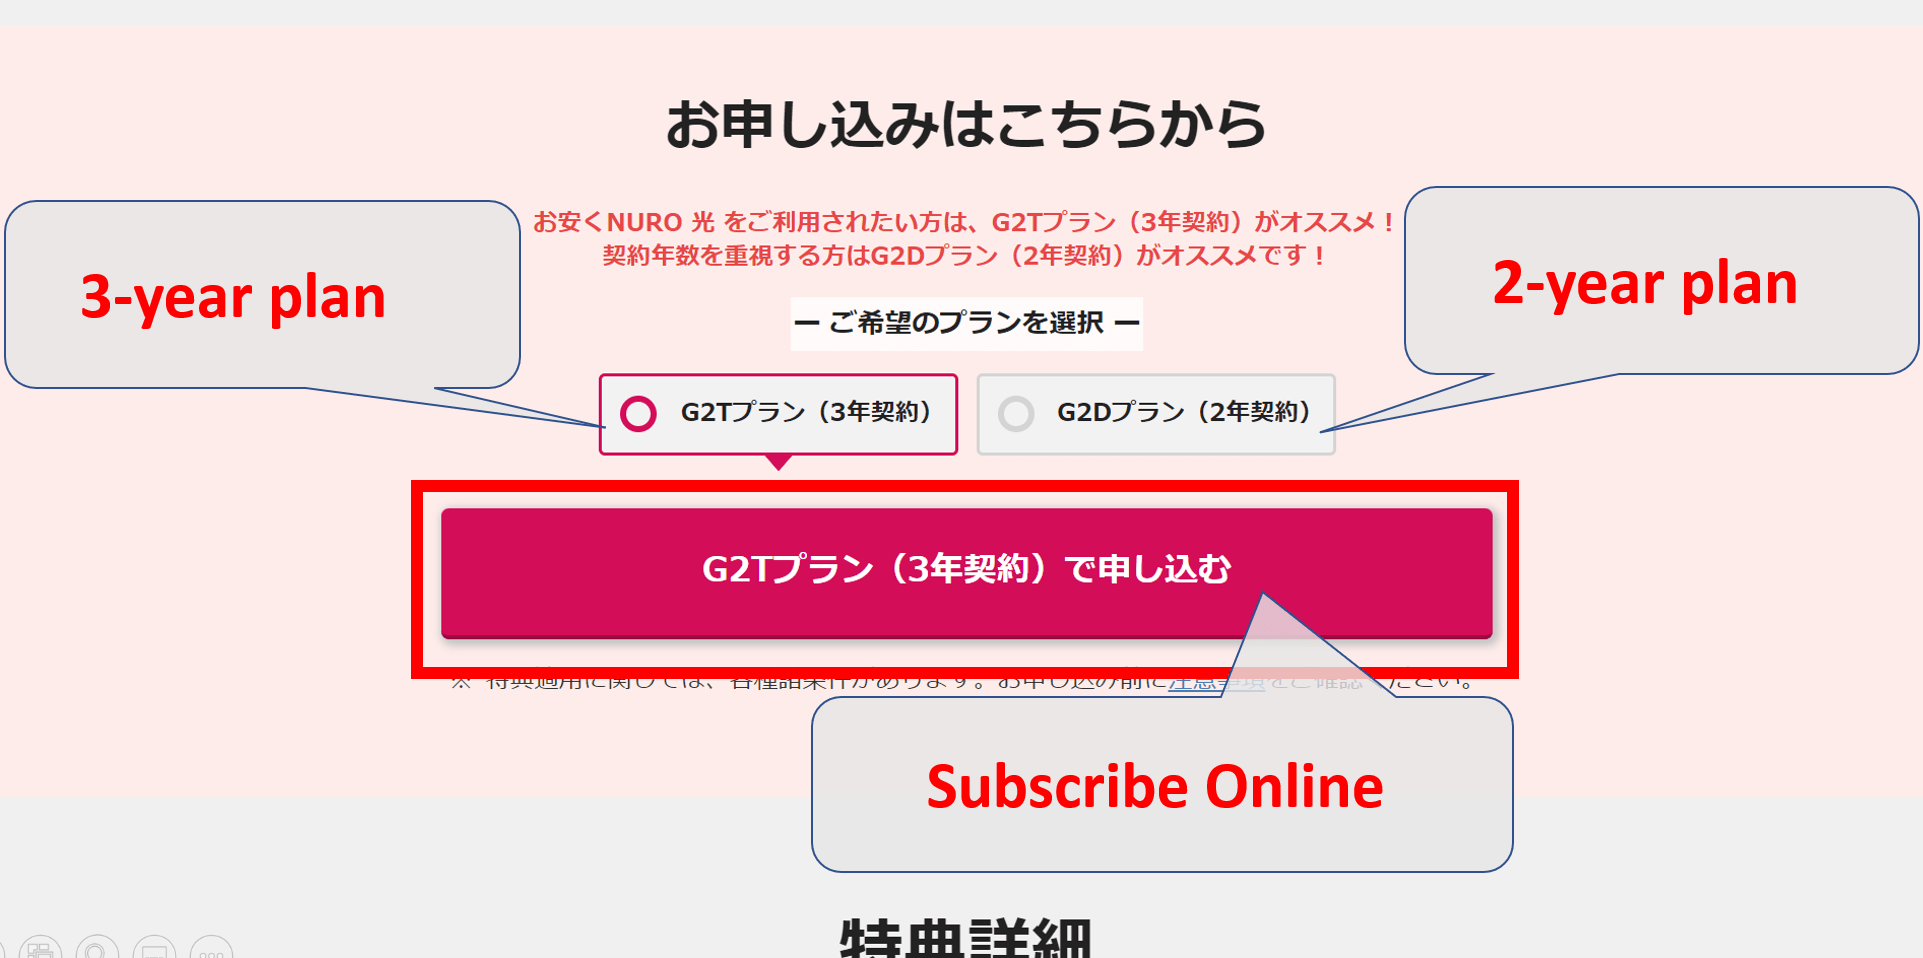 Nuro Hikari: How to Subscribe Online